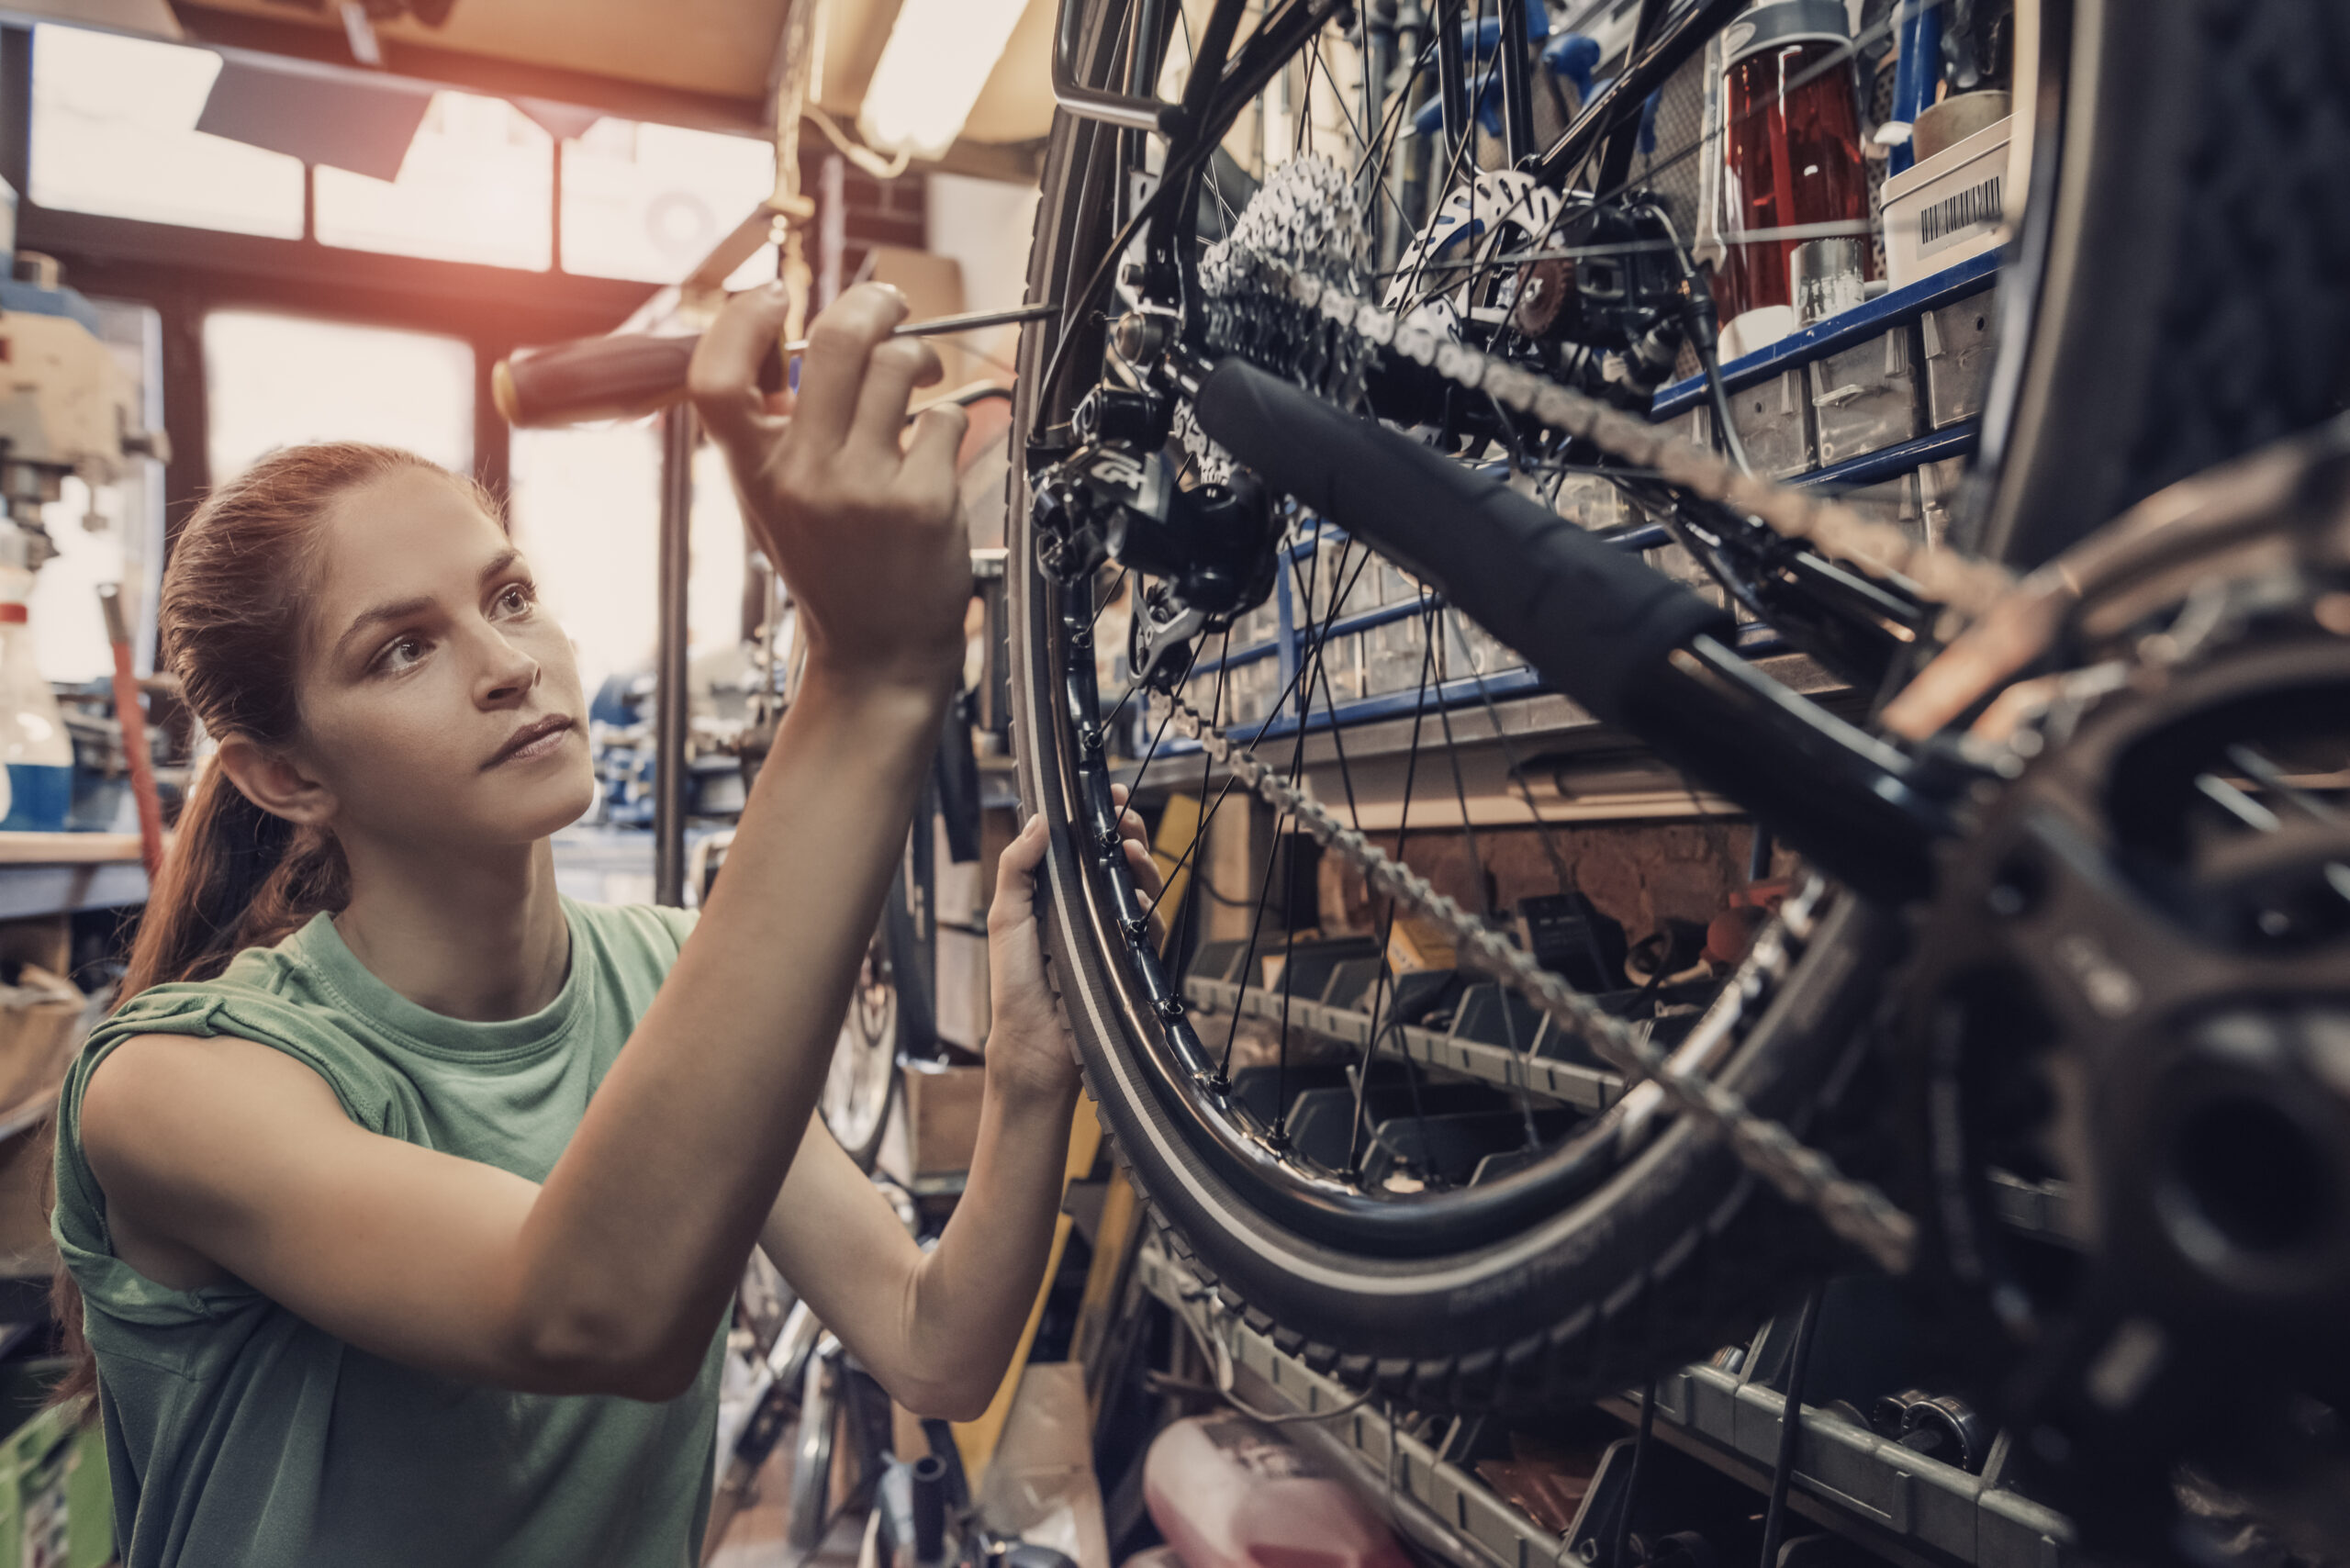 Woman,Bicycle,Mechanic,Is,Repairing,A,Bike,In,The,Workshop